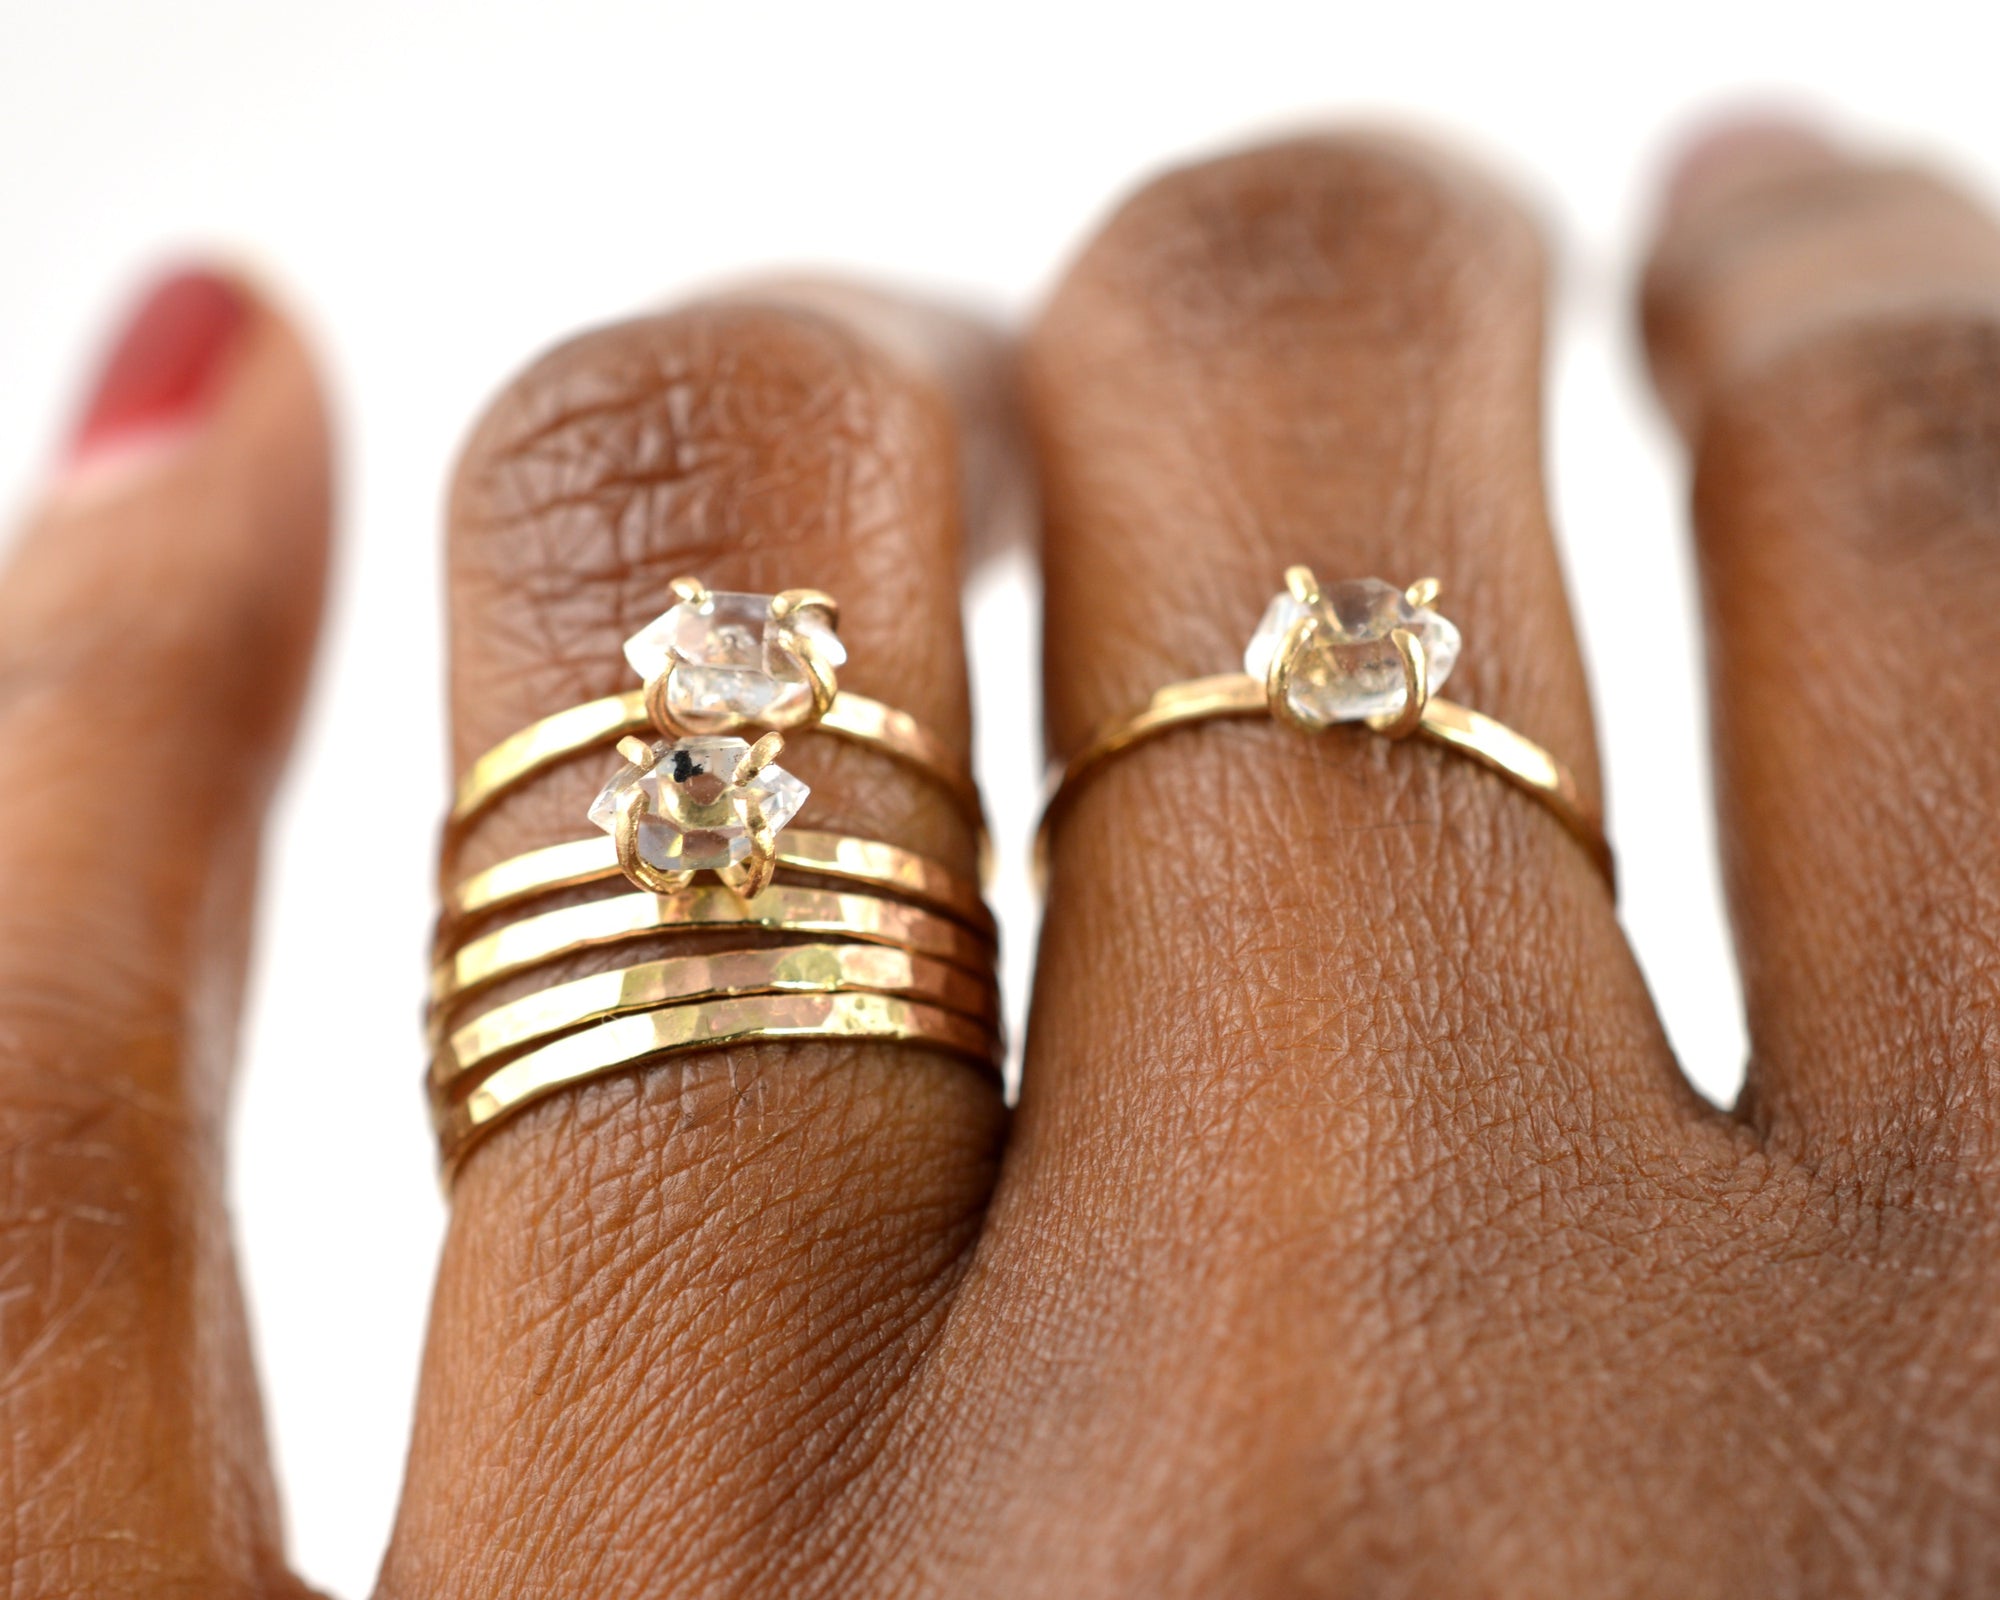 Silver Gold Promise Rings Delicate Design Knot Set Diamond Fashion Ring  Light | eBay